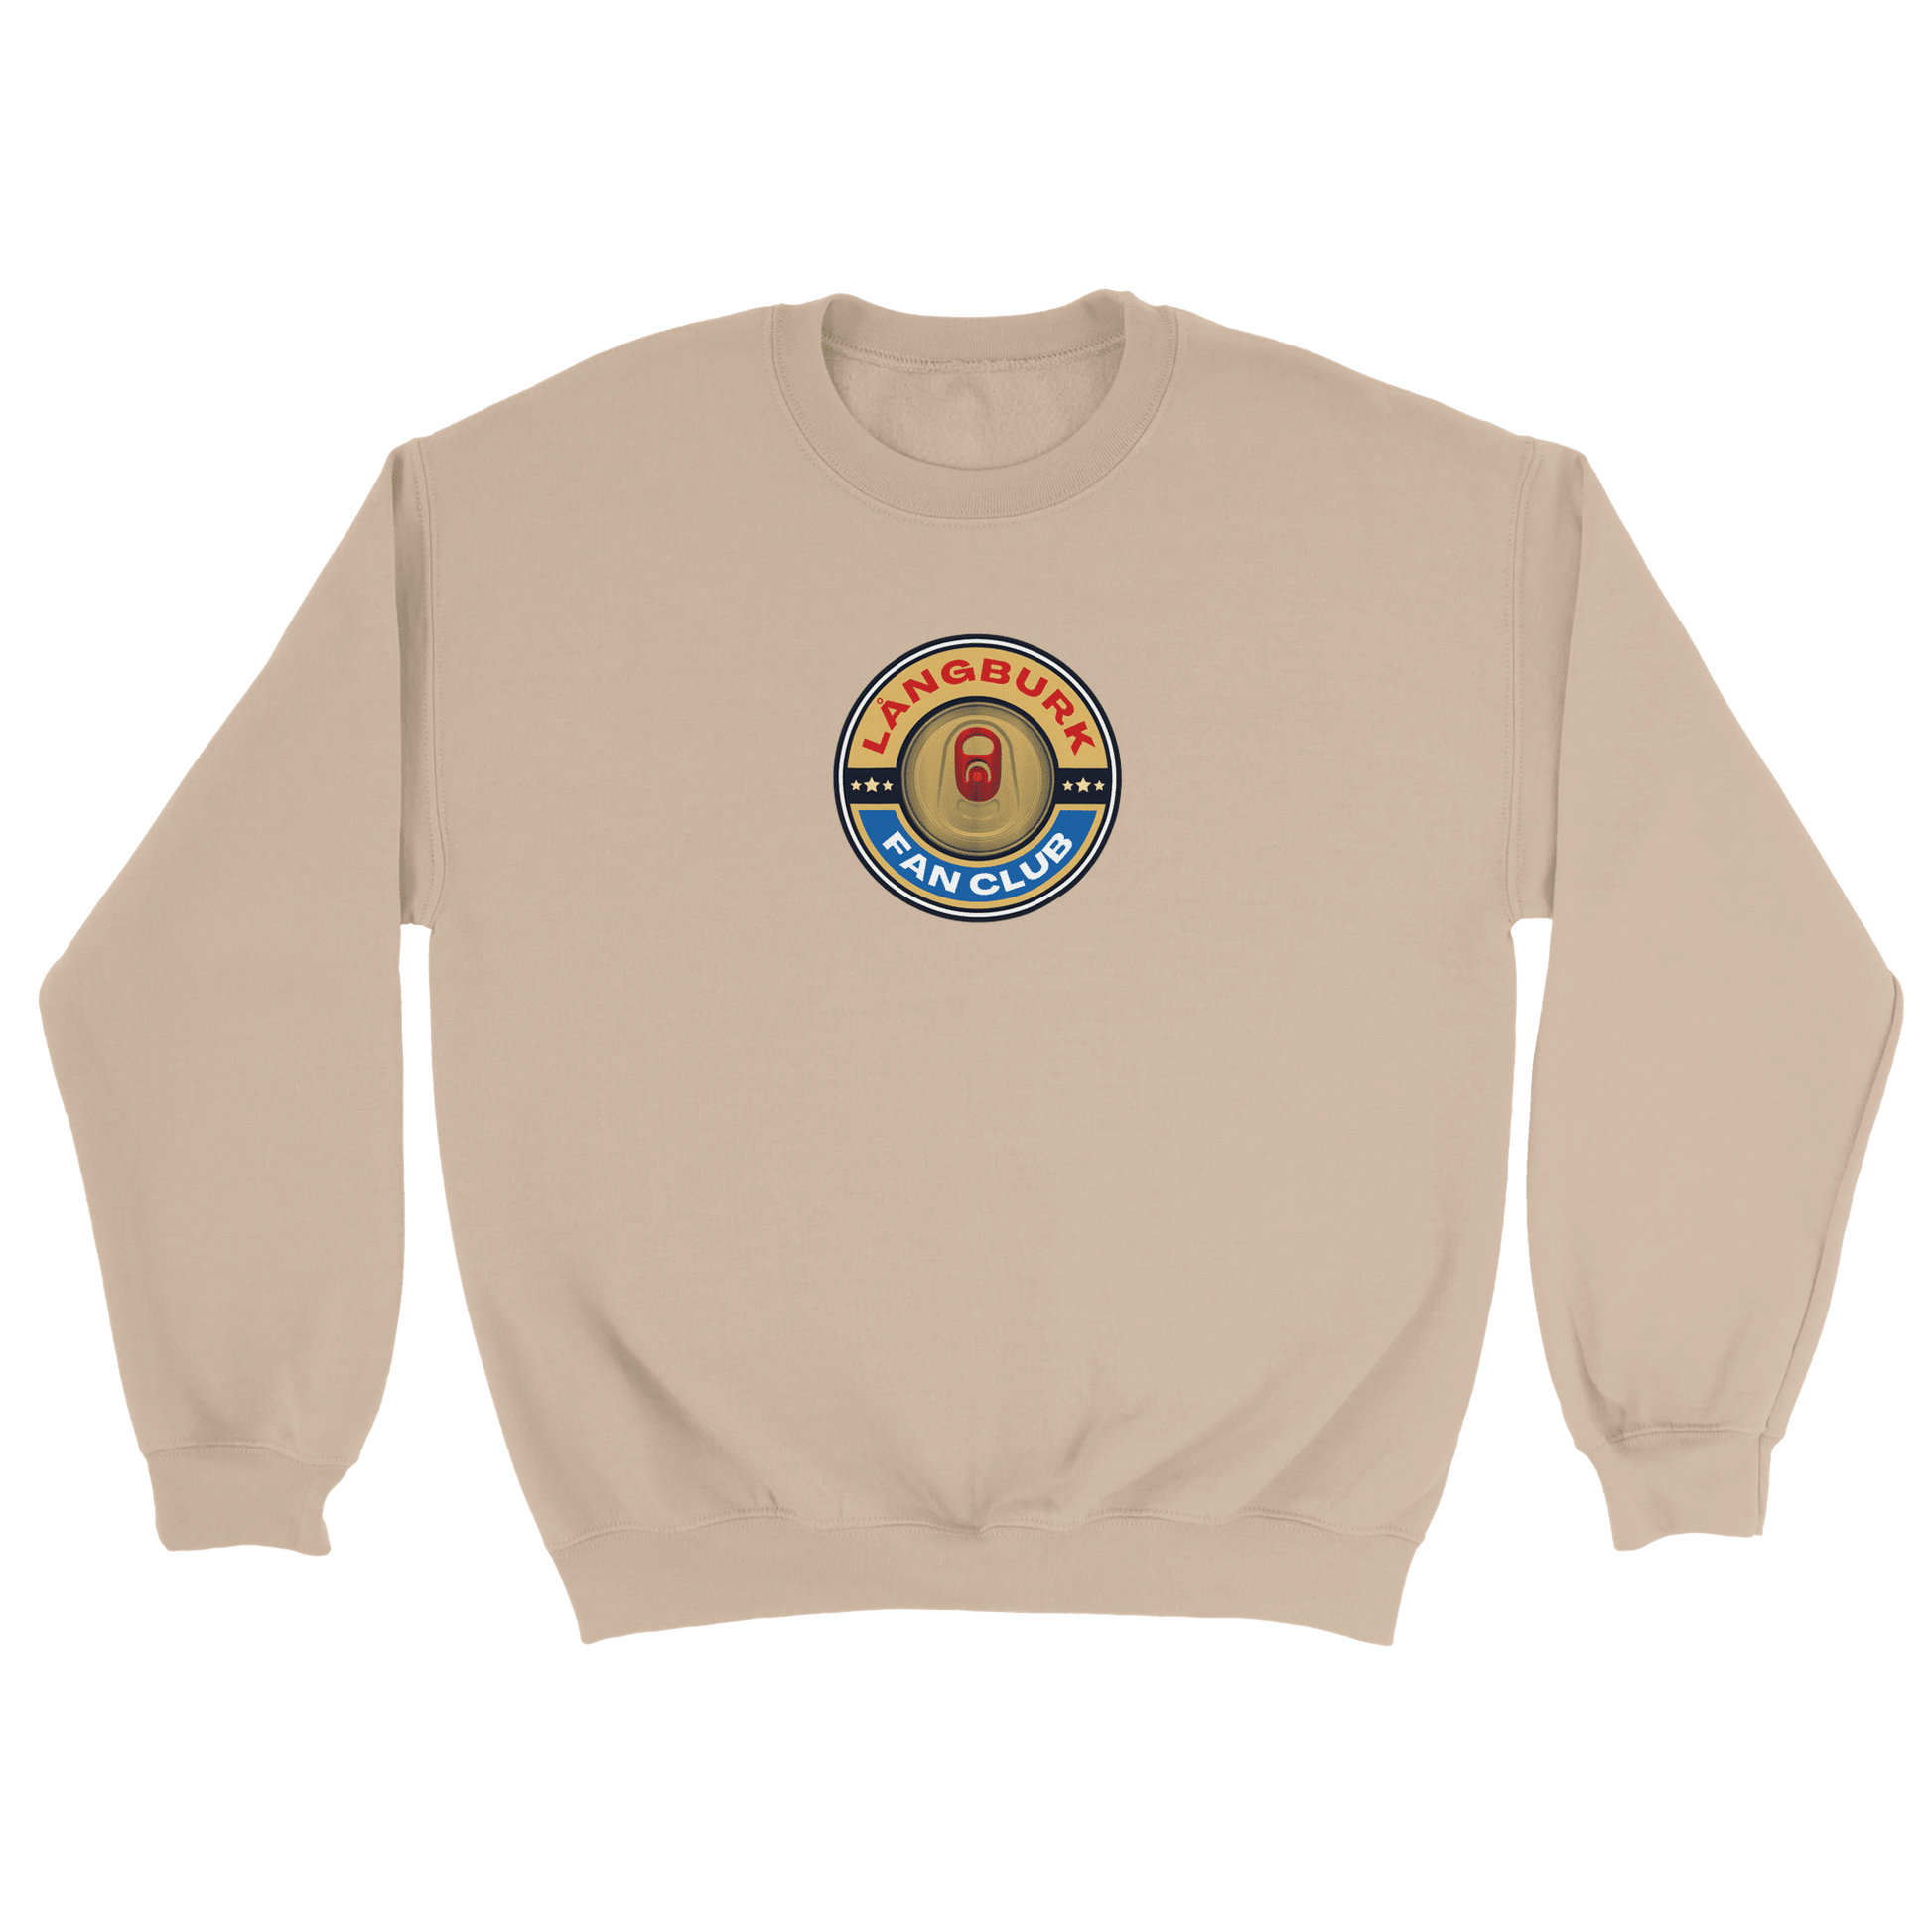 Långburk Fan Club Norrland Edition - Sweatshirt Sand